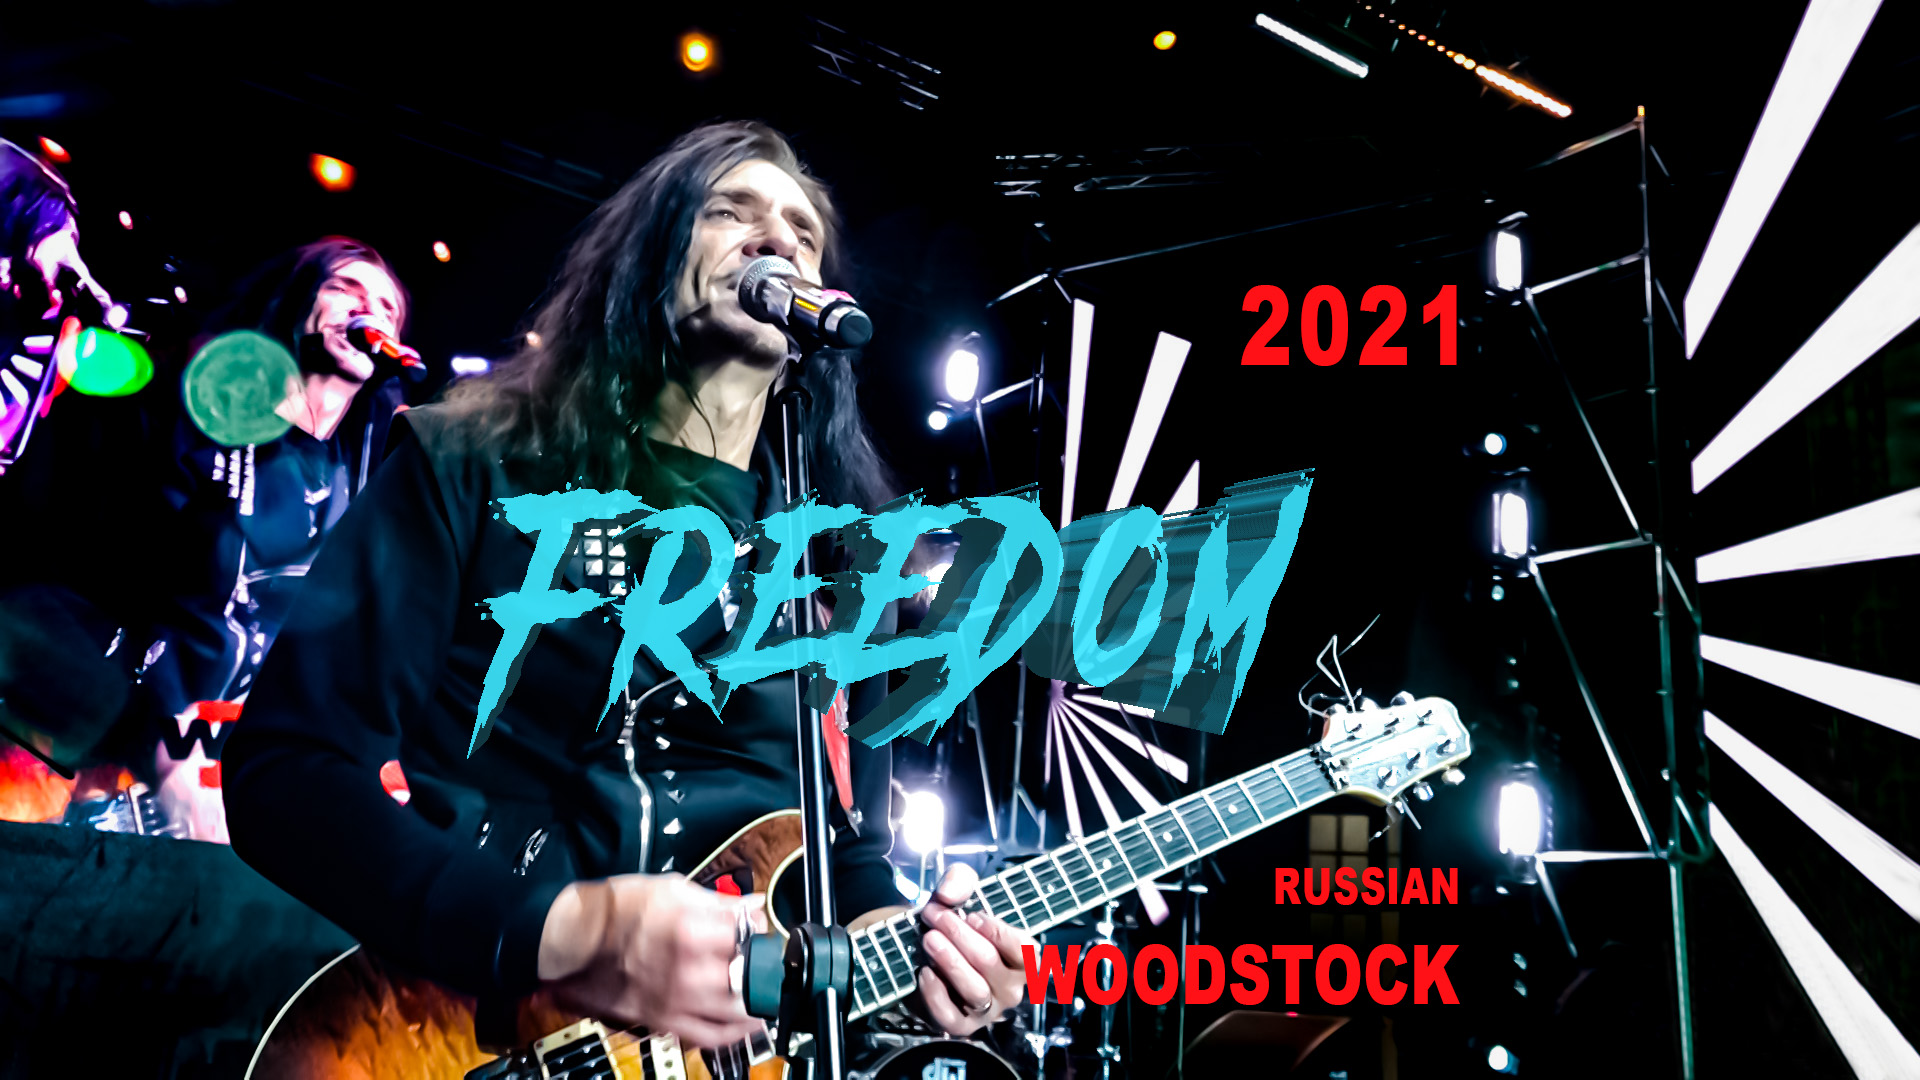 FREEDOM рок композиция. Группа Д. Четвергова, хор Этери Бериашвили, Russian Woodstock 2021